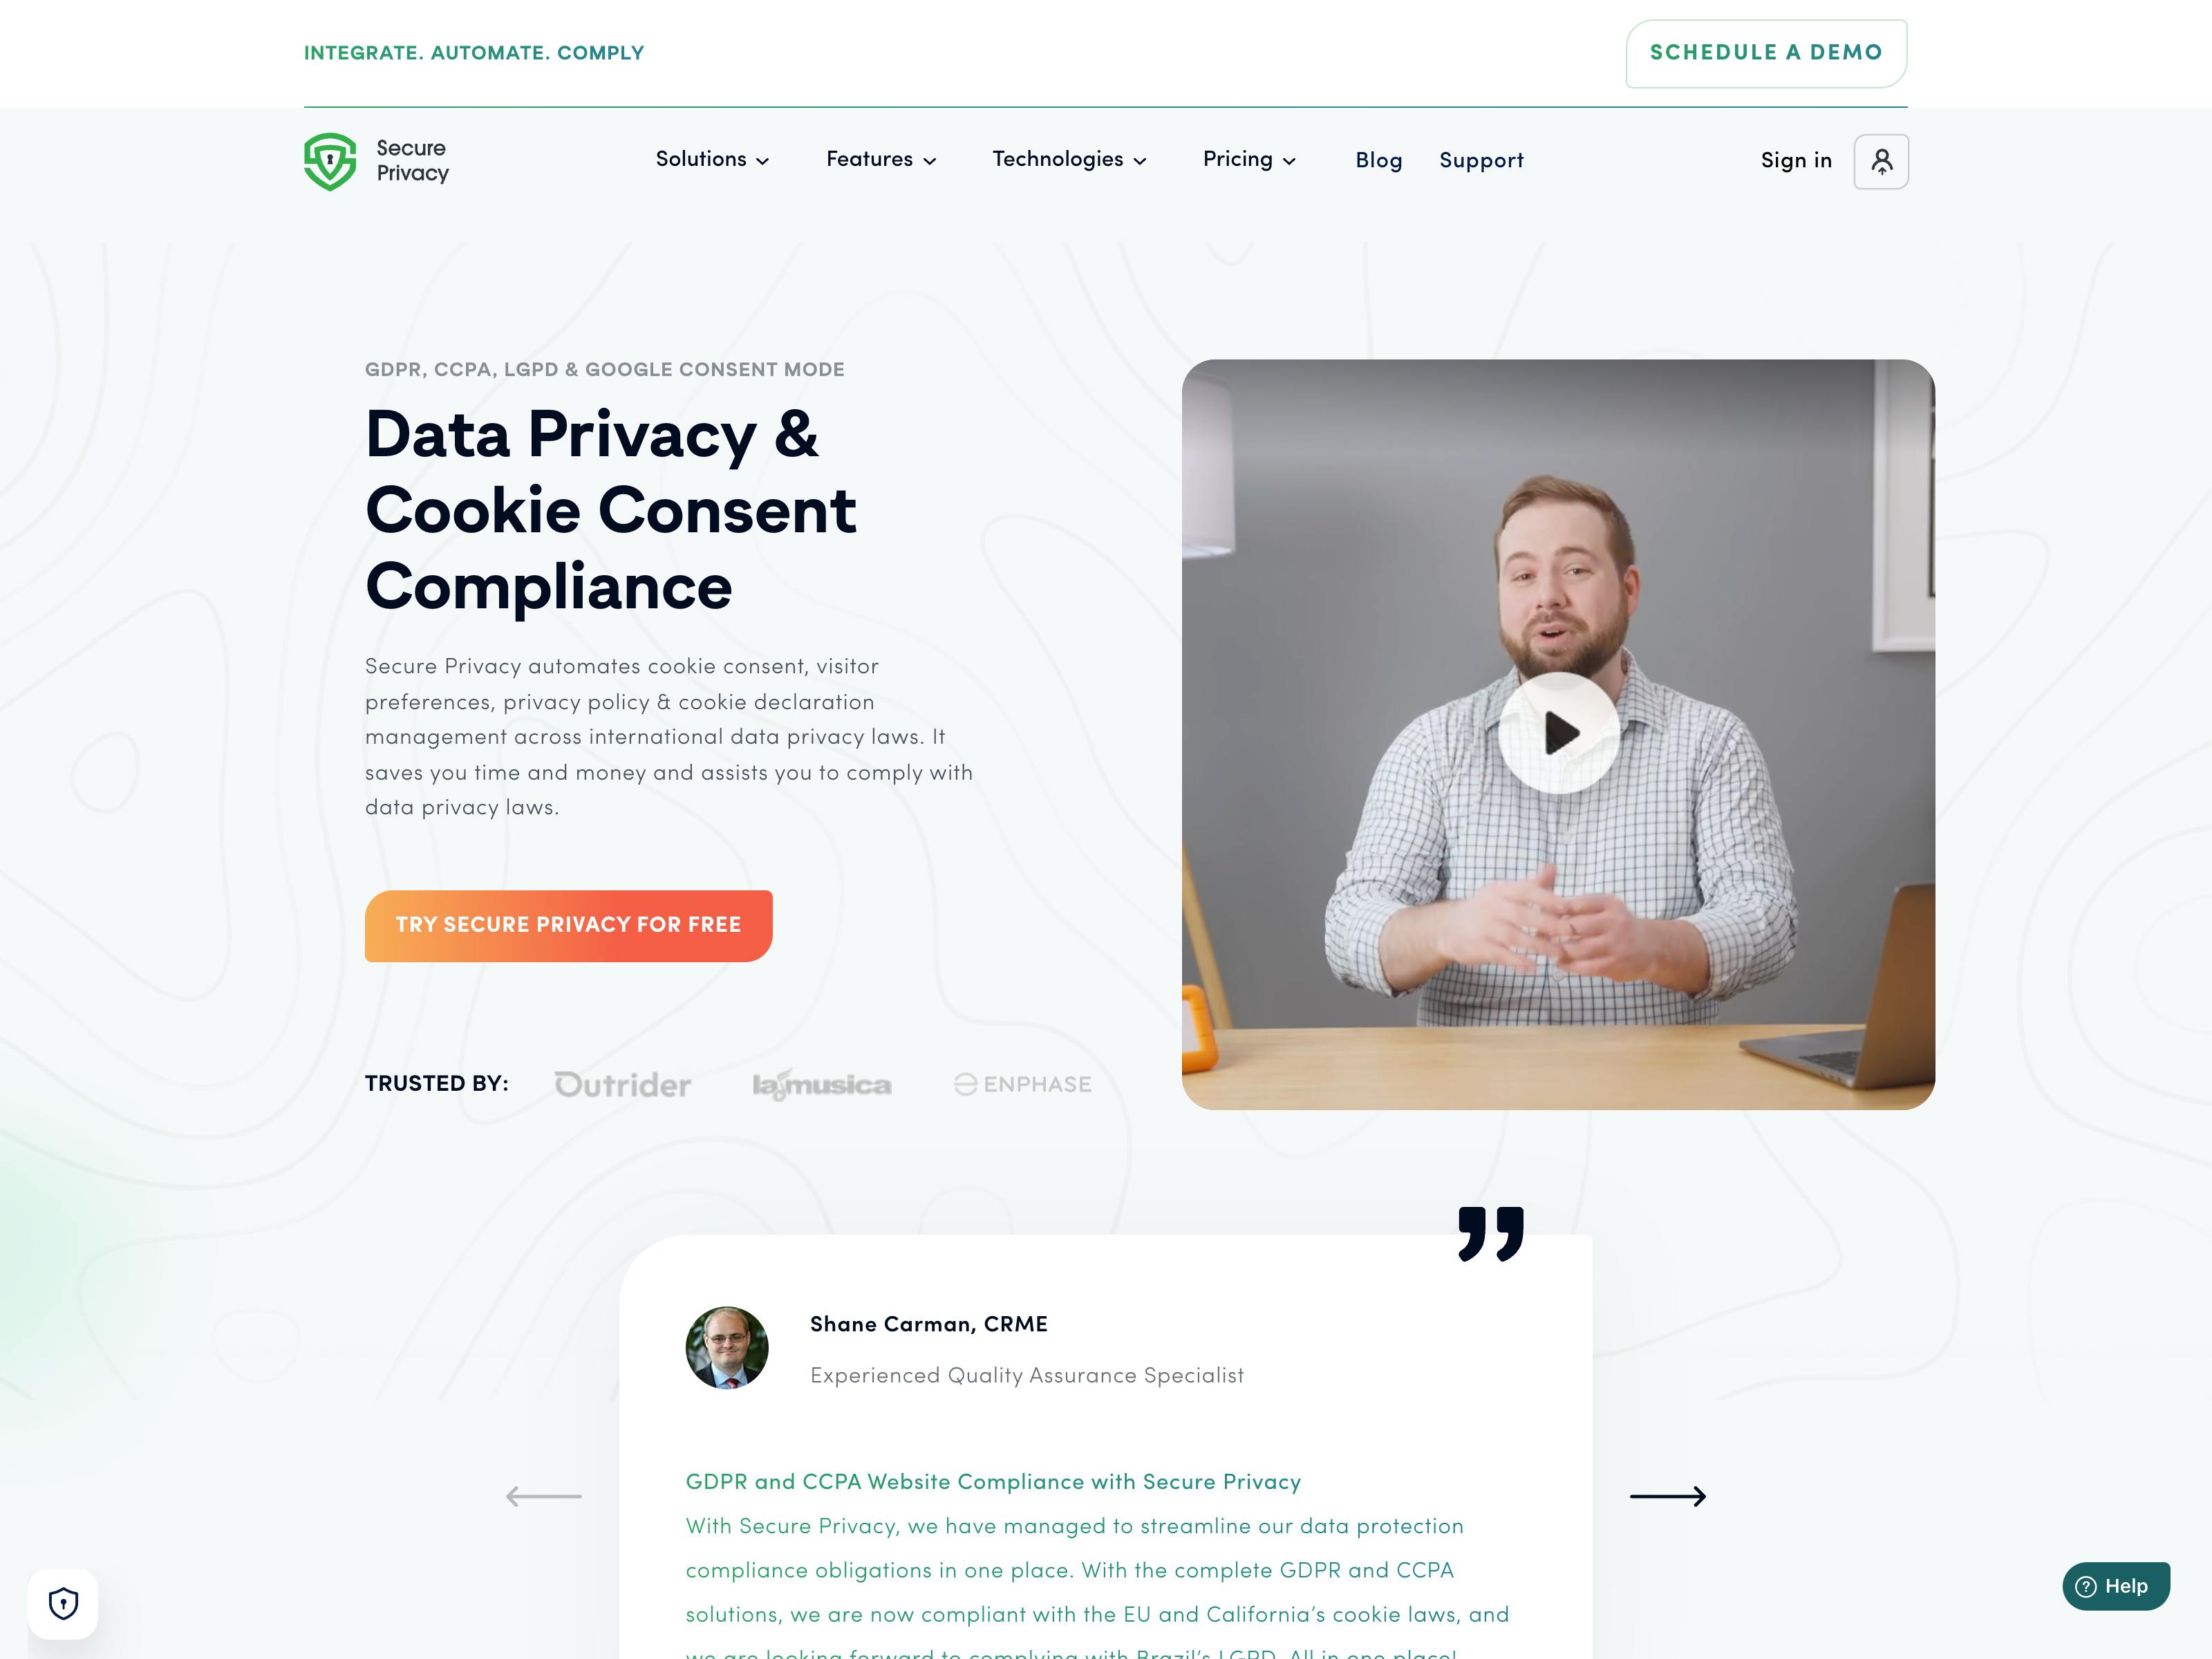 Secure Privacy website screenshot